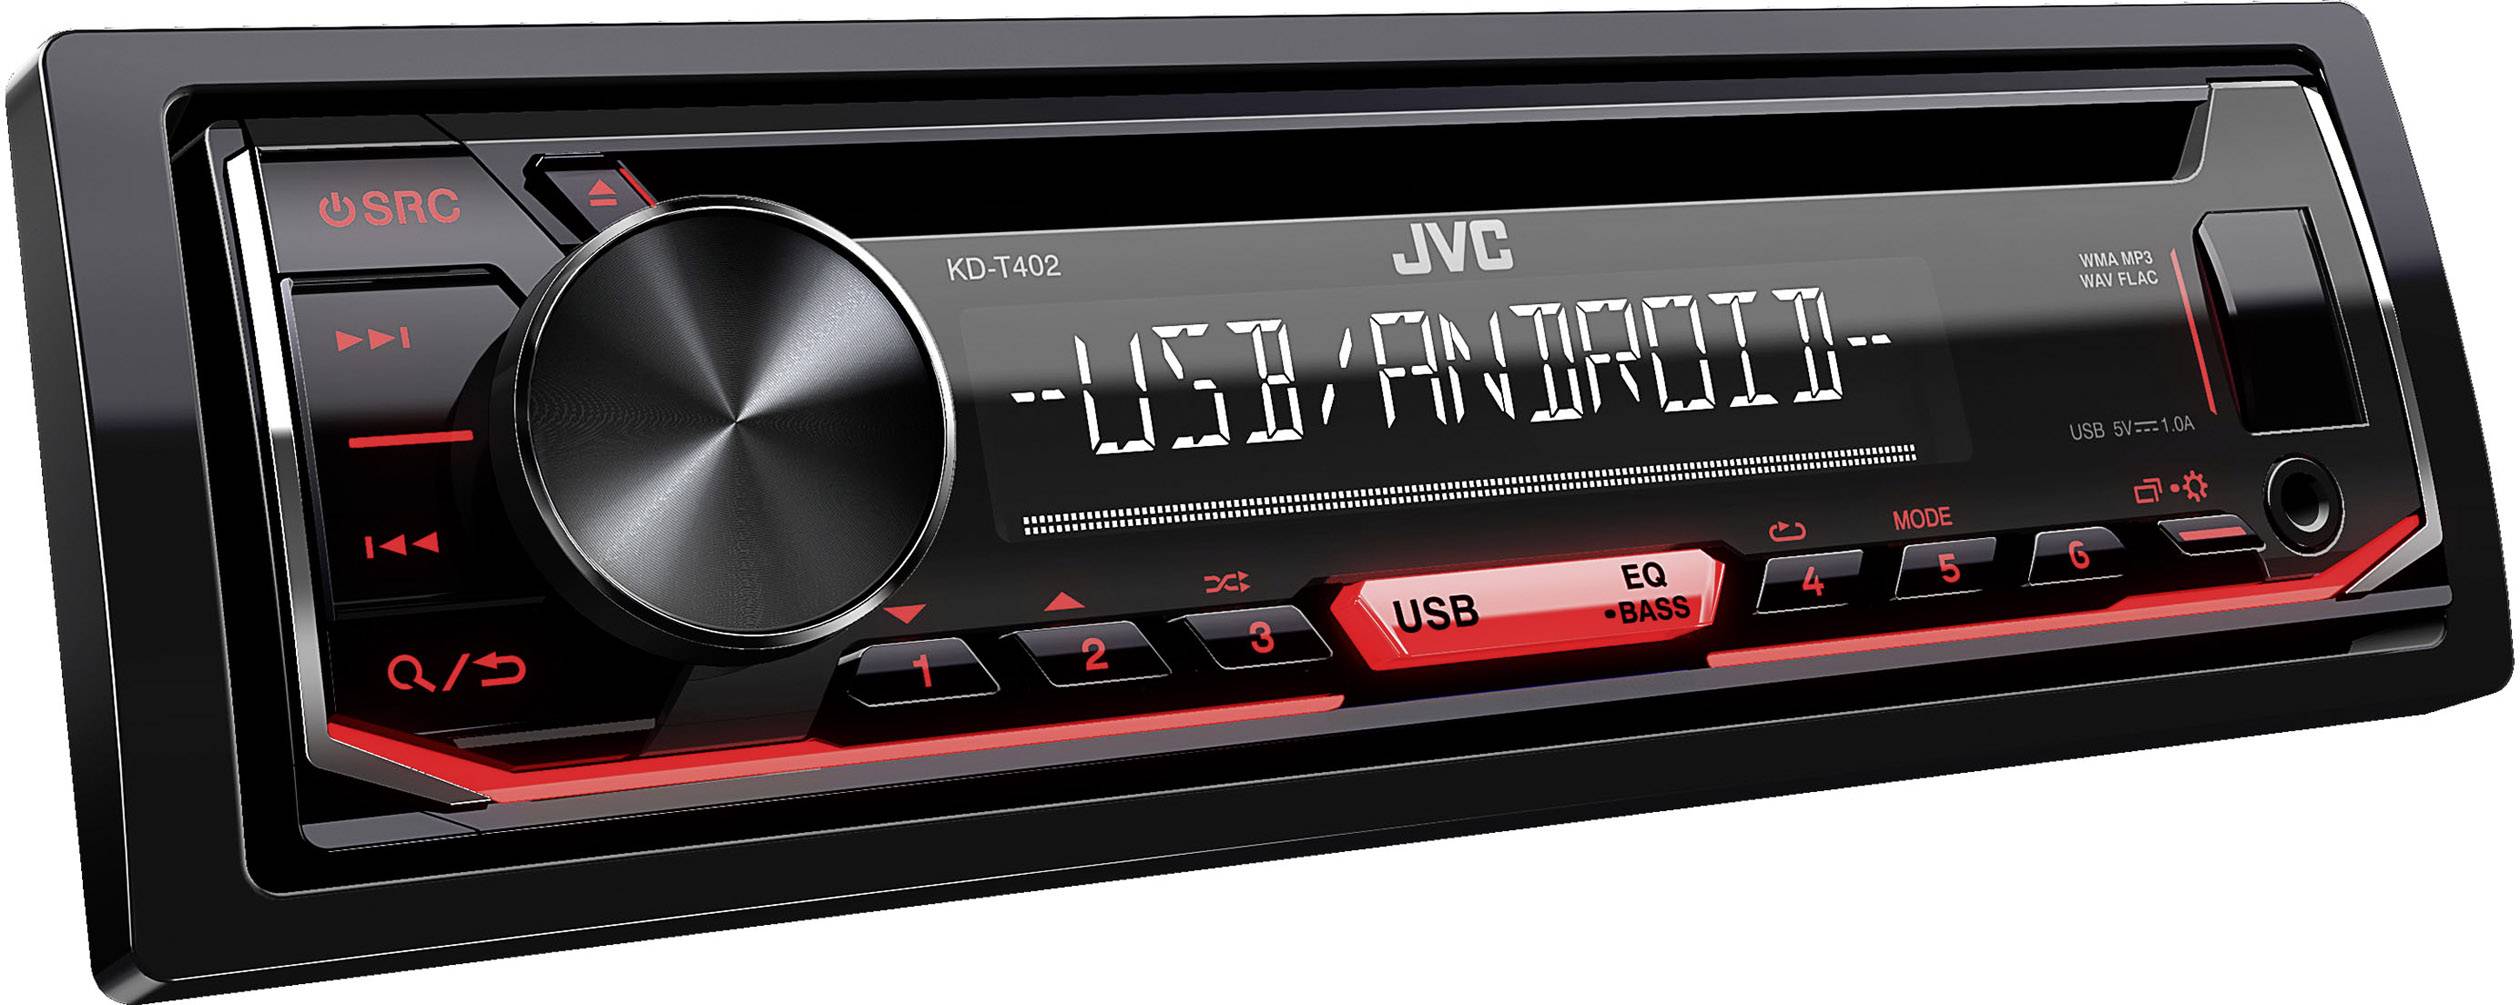 jvc-kd-t402-cd-car-stereo-conrad